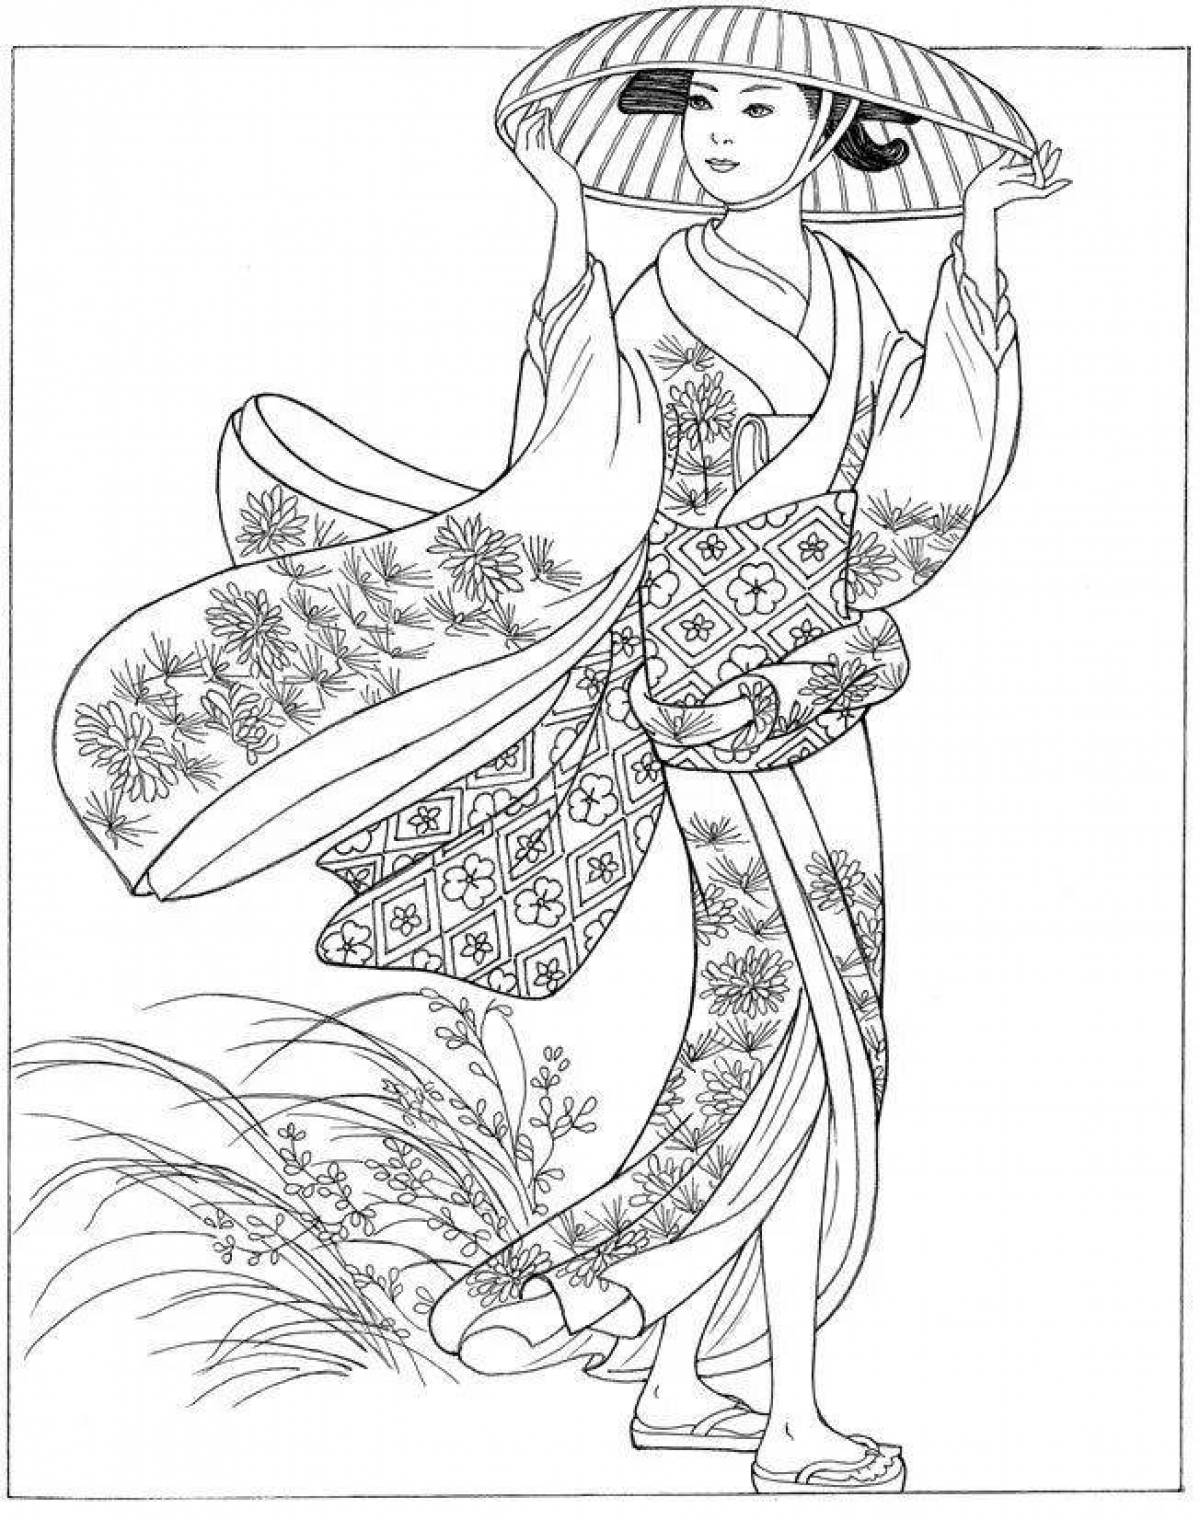 Coloring page of colorful kimono